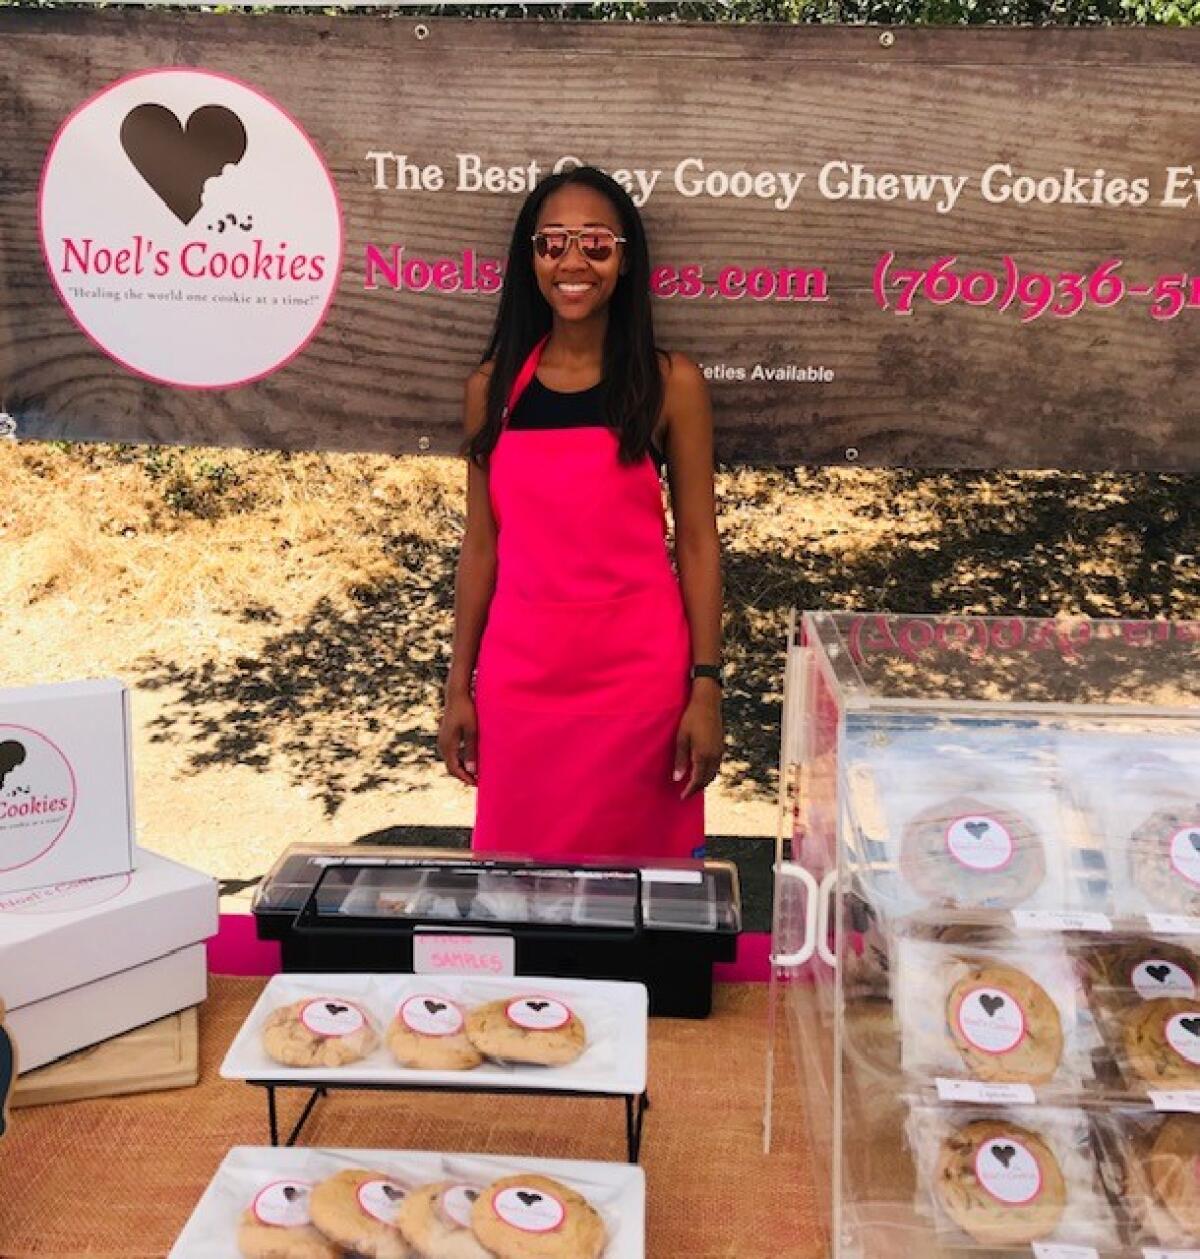 Noel's Cookies owner Noel Ross will be at the La Jolla Art & Wine Festival's “Sweet Street.”